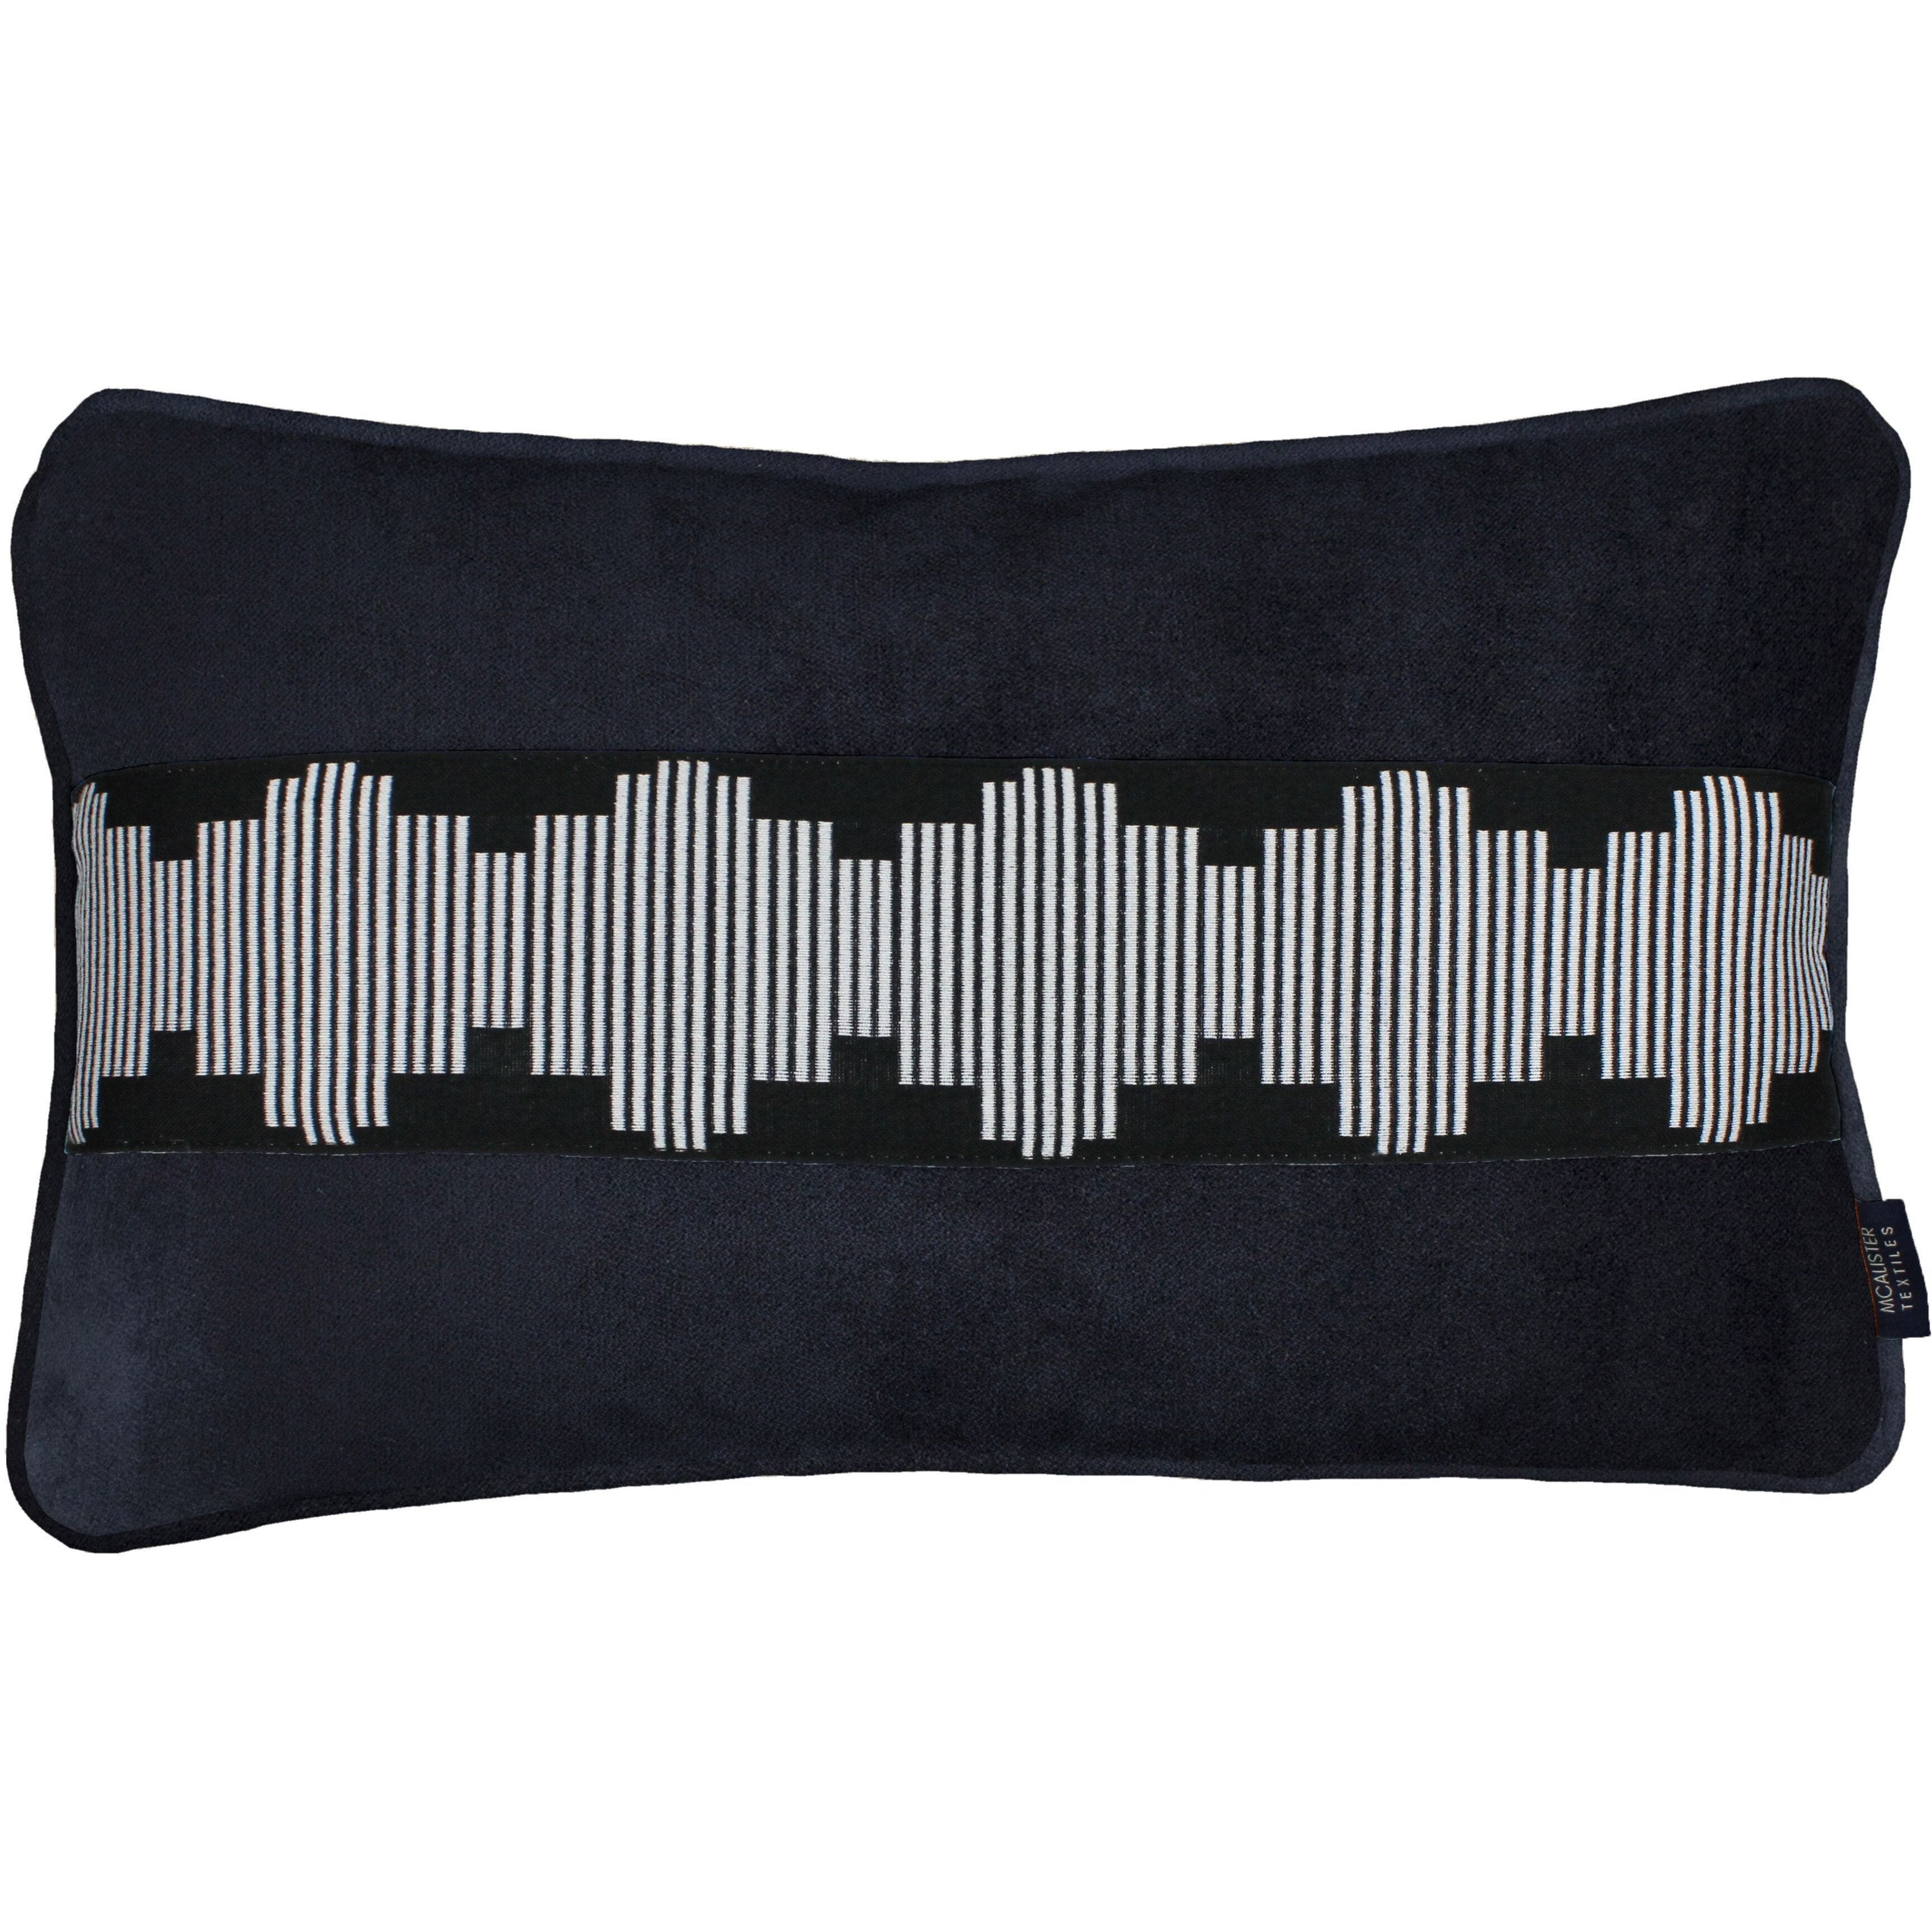 McAlister Textiles Maya Striped Black Velvet Pillow Pillow Cover Only 50cm x 30cm 